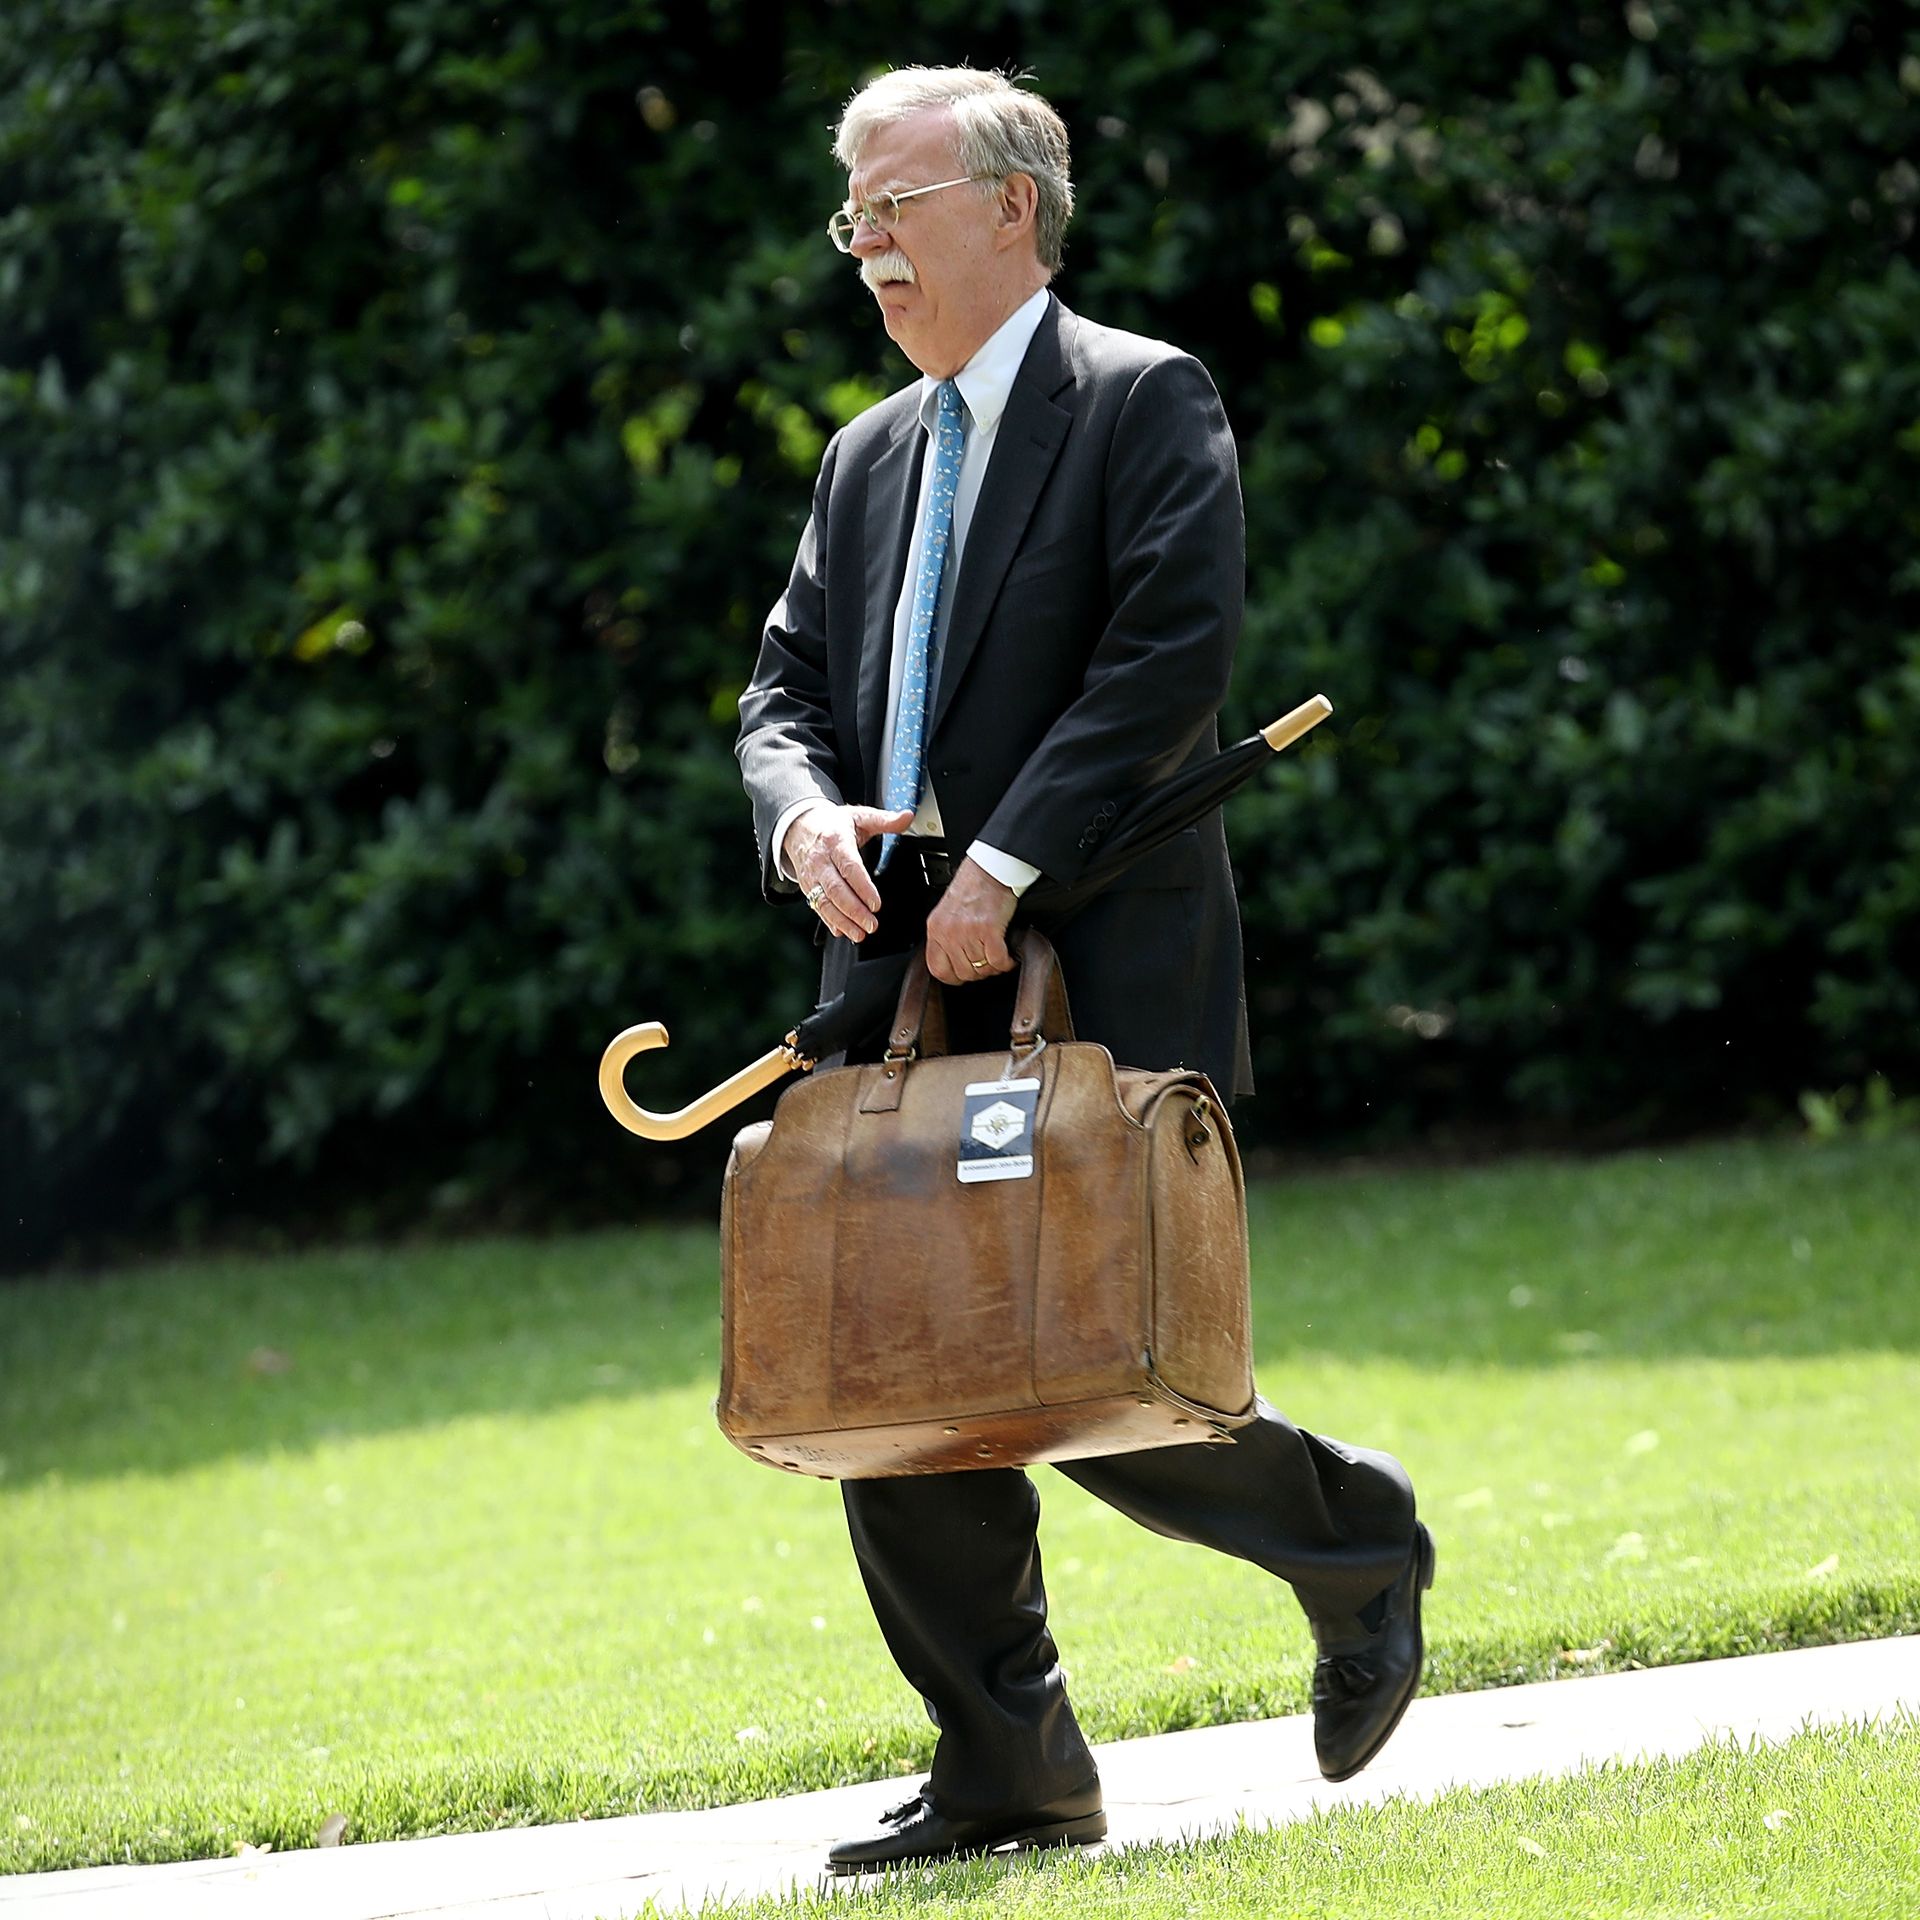 John Bolton carrying luggage and umbrella